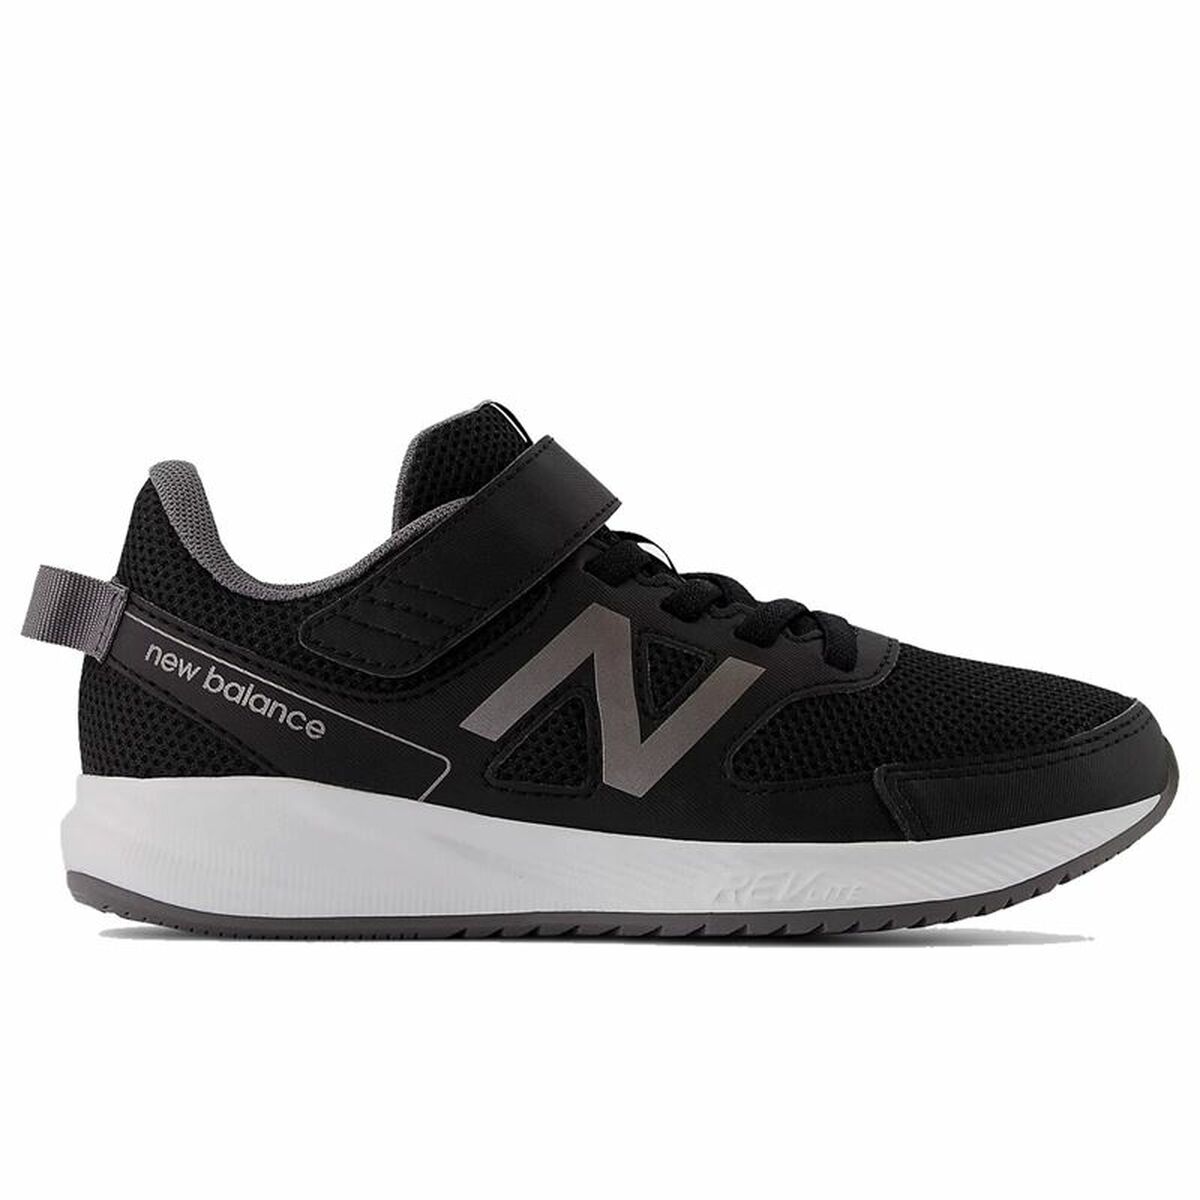 Chaussures casual enfant New Balance 570v3 Noir